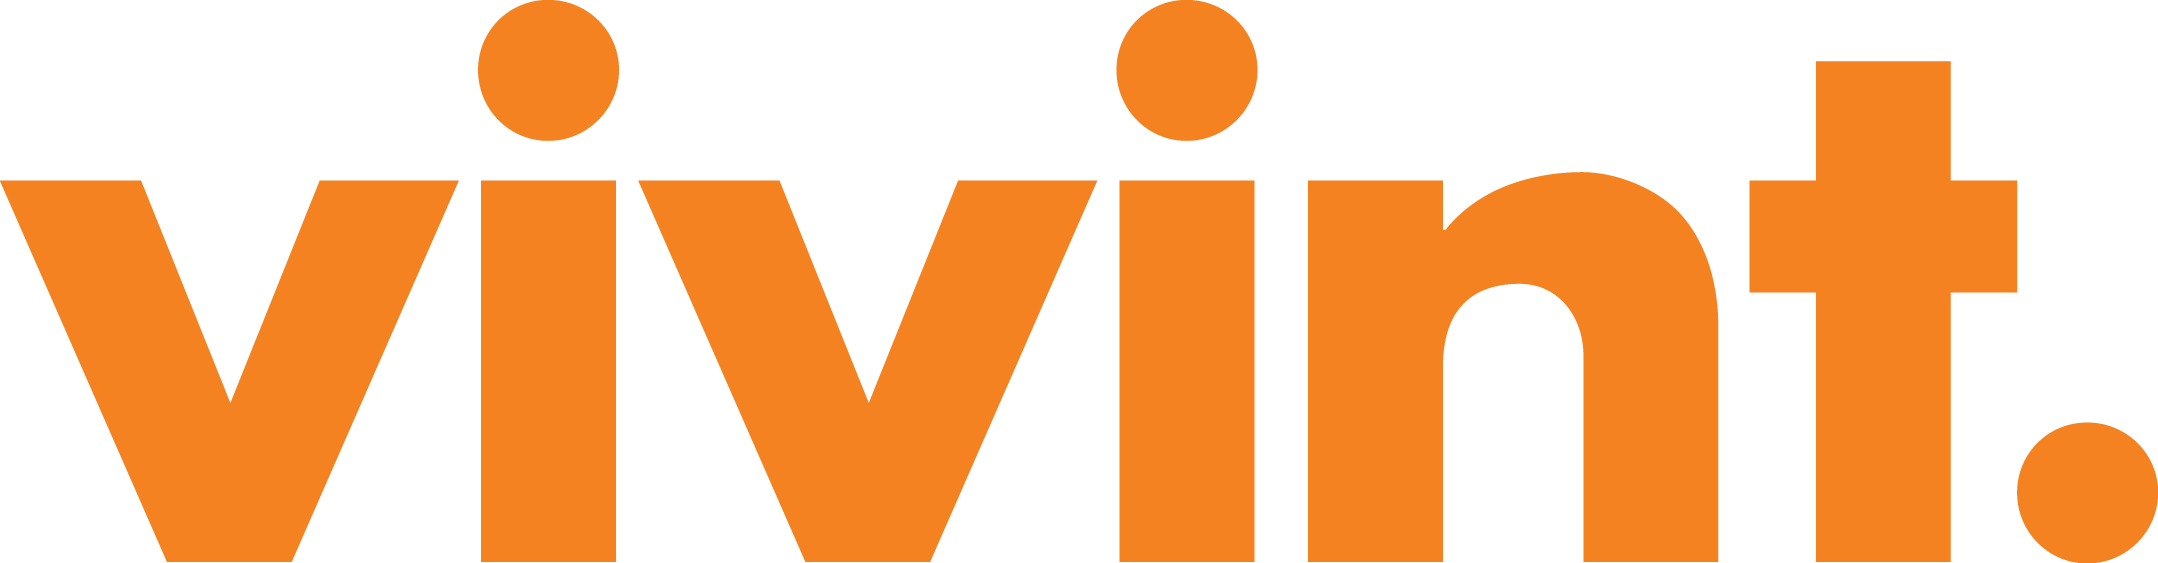 Vivint Logo - Vivint-Logo | Automated Insights